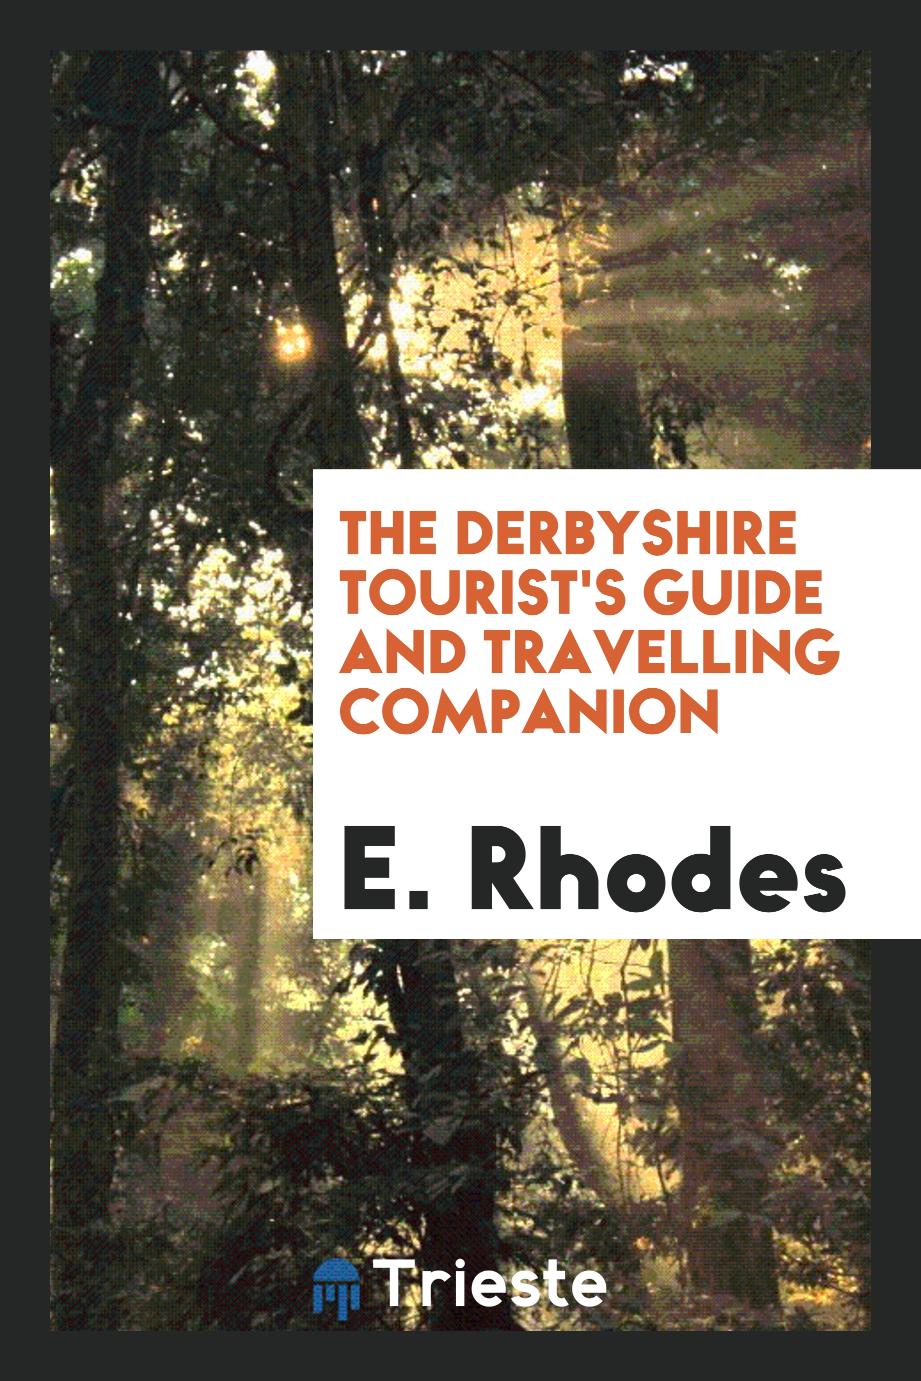 E. Rhodes - The Derbyshire Tourist's Guide and Travelling Companion